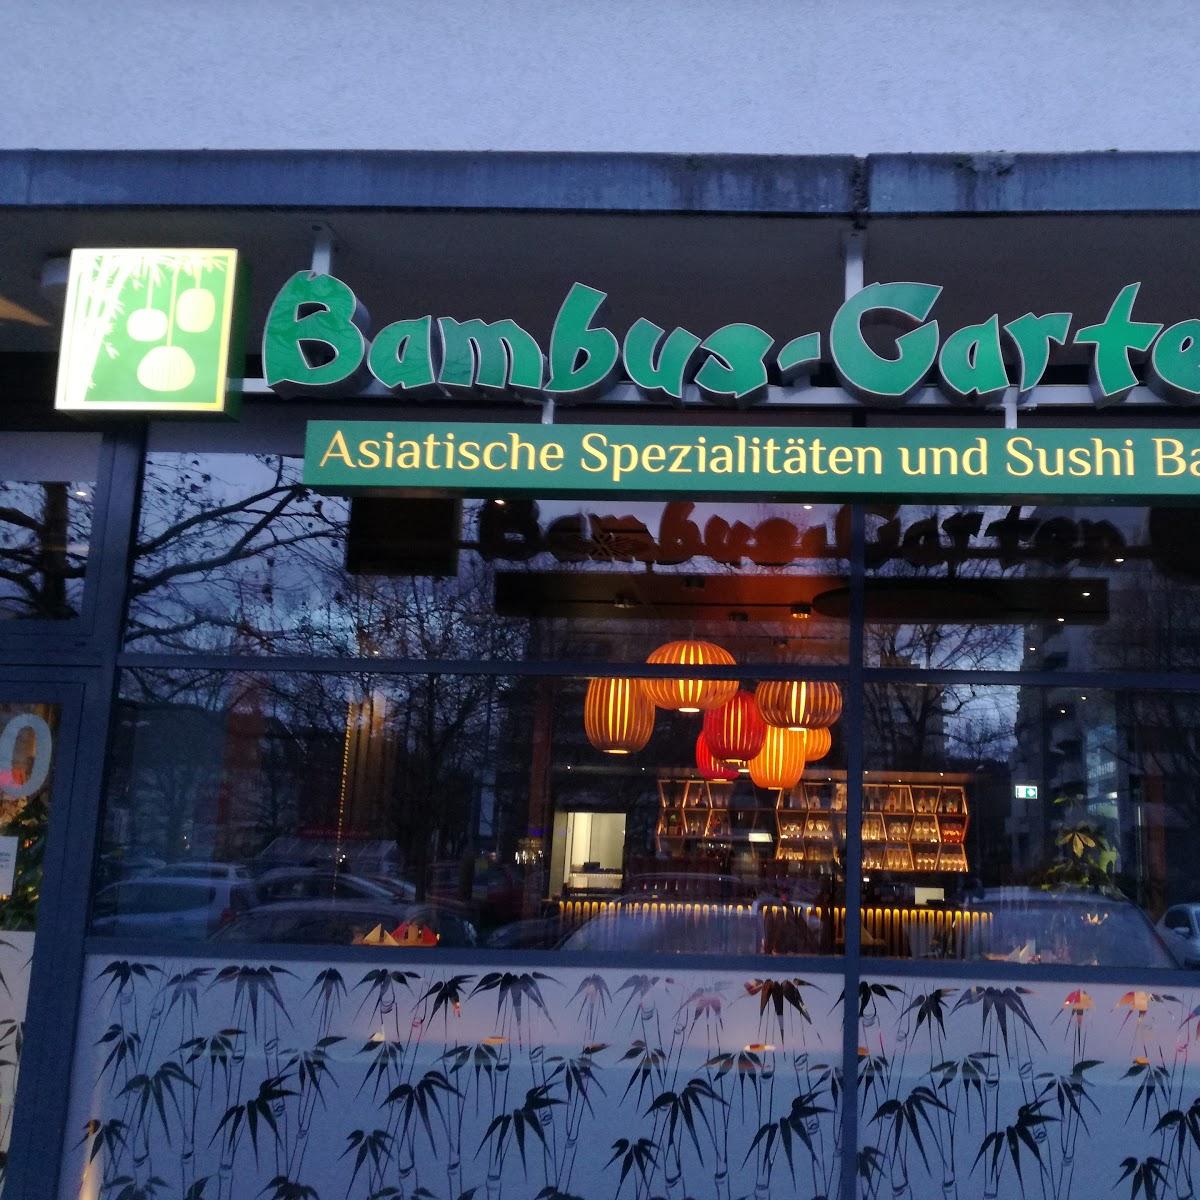 Restaurant "Bambus-Garten" in Karlsruhe